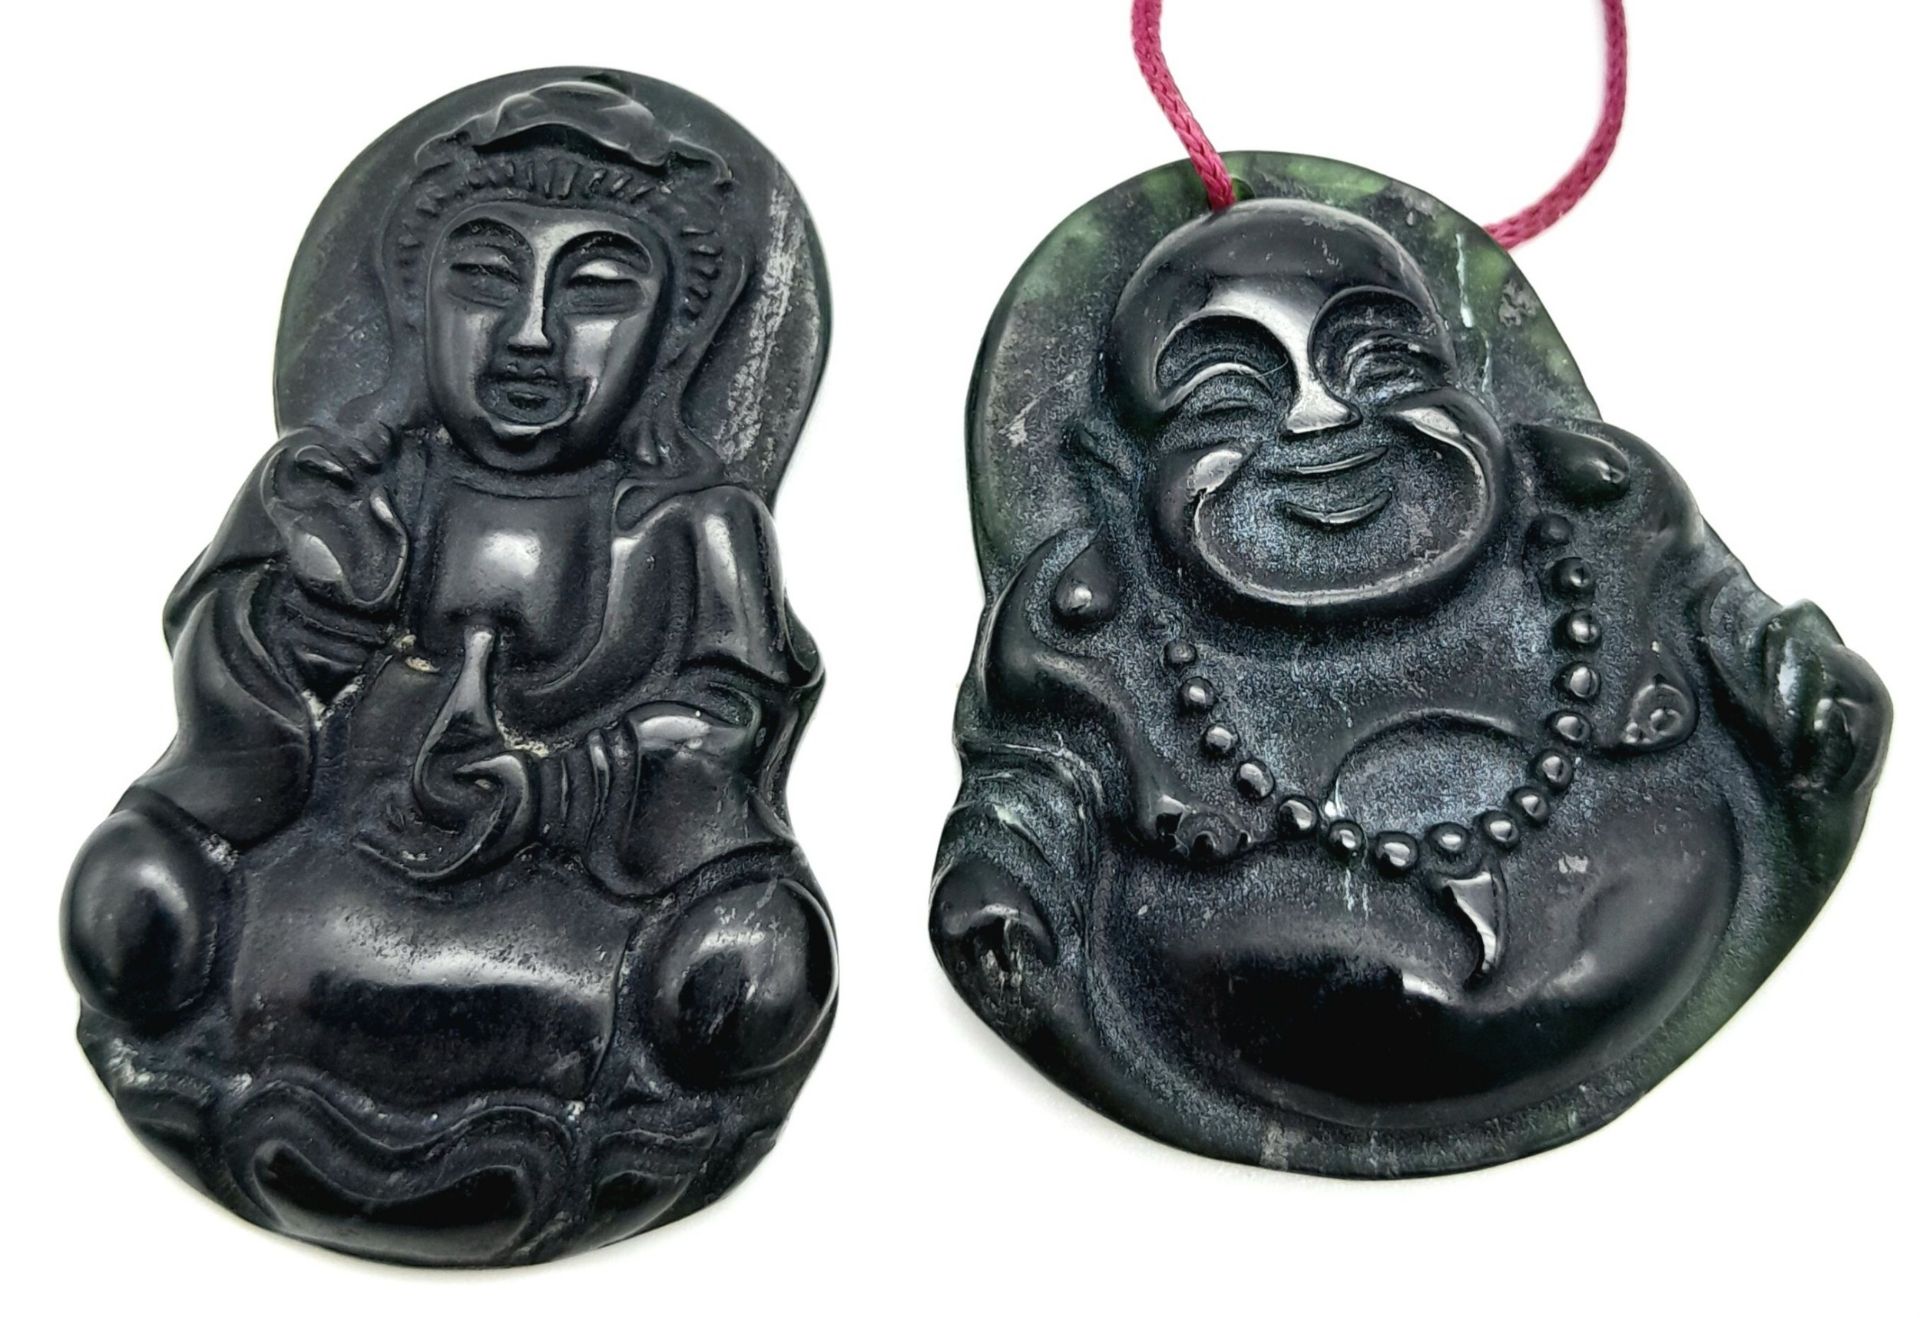 2 x Black Onyx Buddha Pendants - Buddha and Laughing Buddha. 4.5cm and 4cm length. 25g total weight. - Image 2 of 4